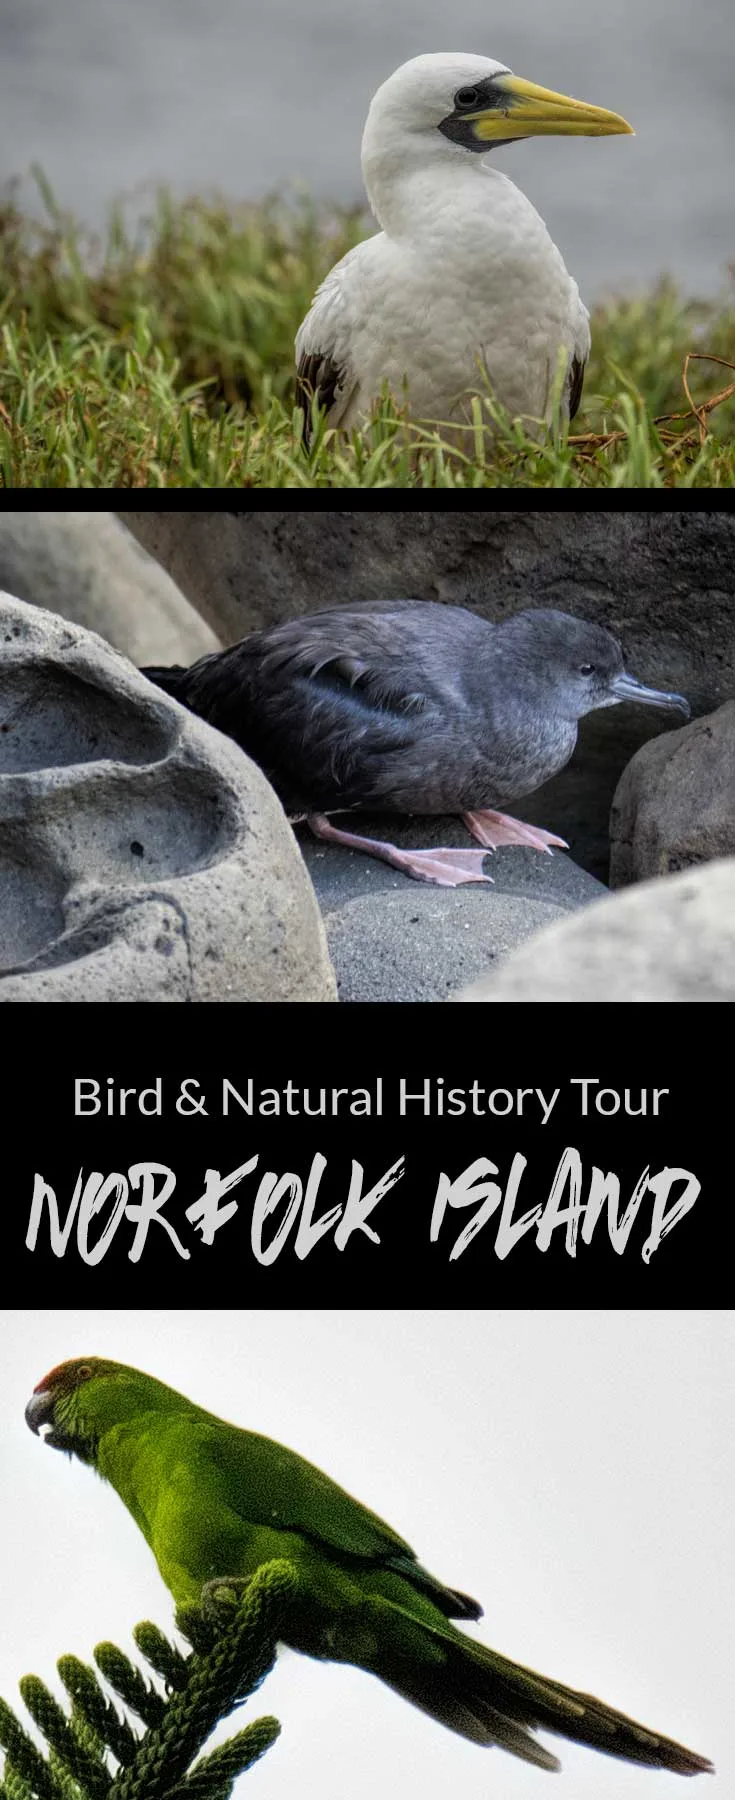 Birds and Natural History Tour, Norfolk Island, Australia